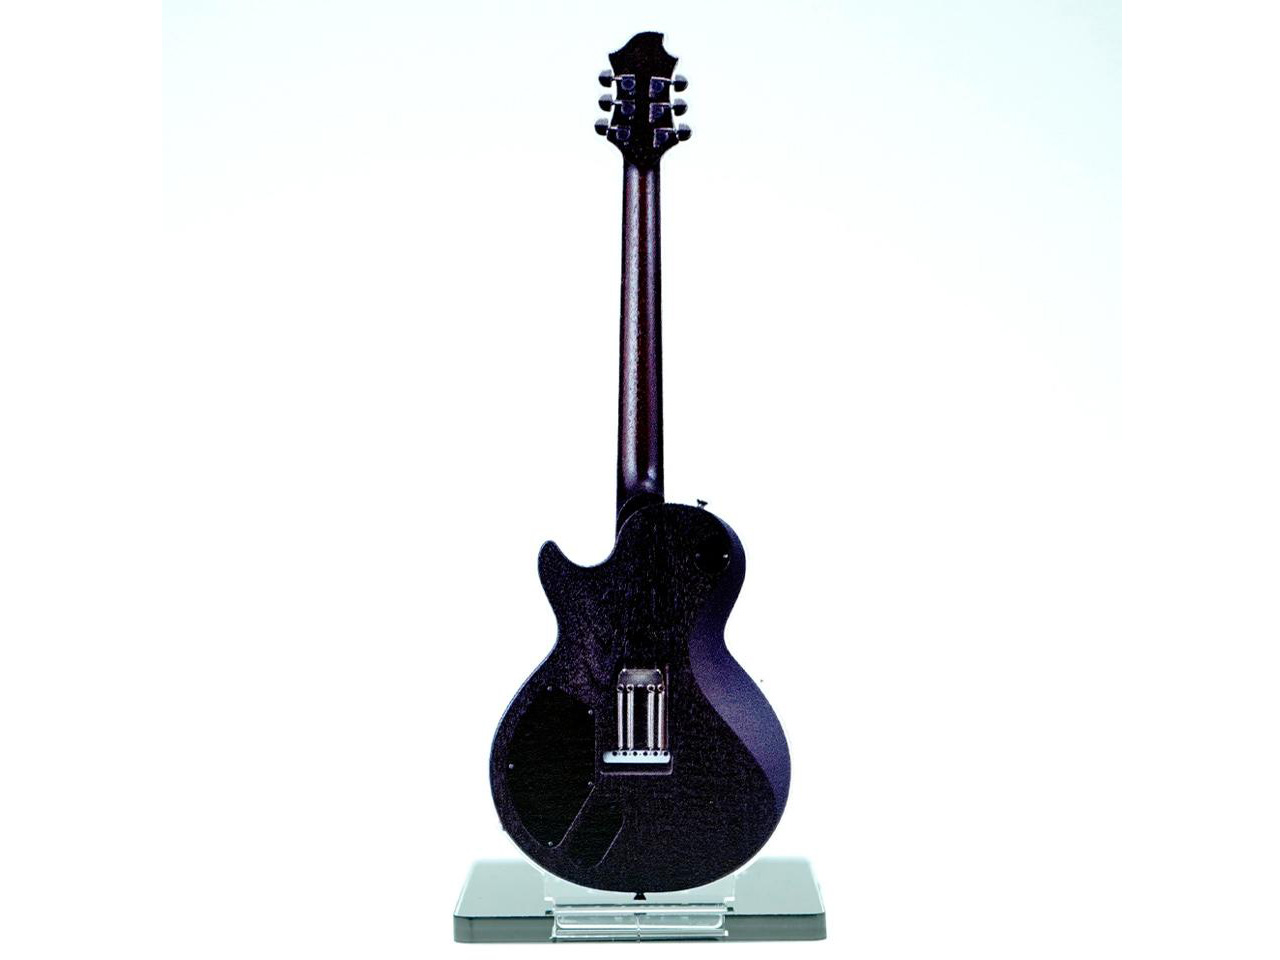 ESP Acrylic Keyholder Guitar Collection -SUGIZO Vol.1- AS-SGZ-04 (ESP ECLIPSE S-III Fretless QUILT) / スタンドタイプ